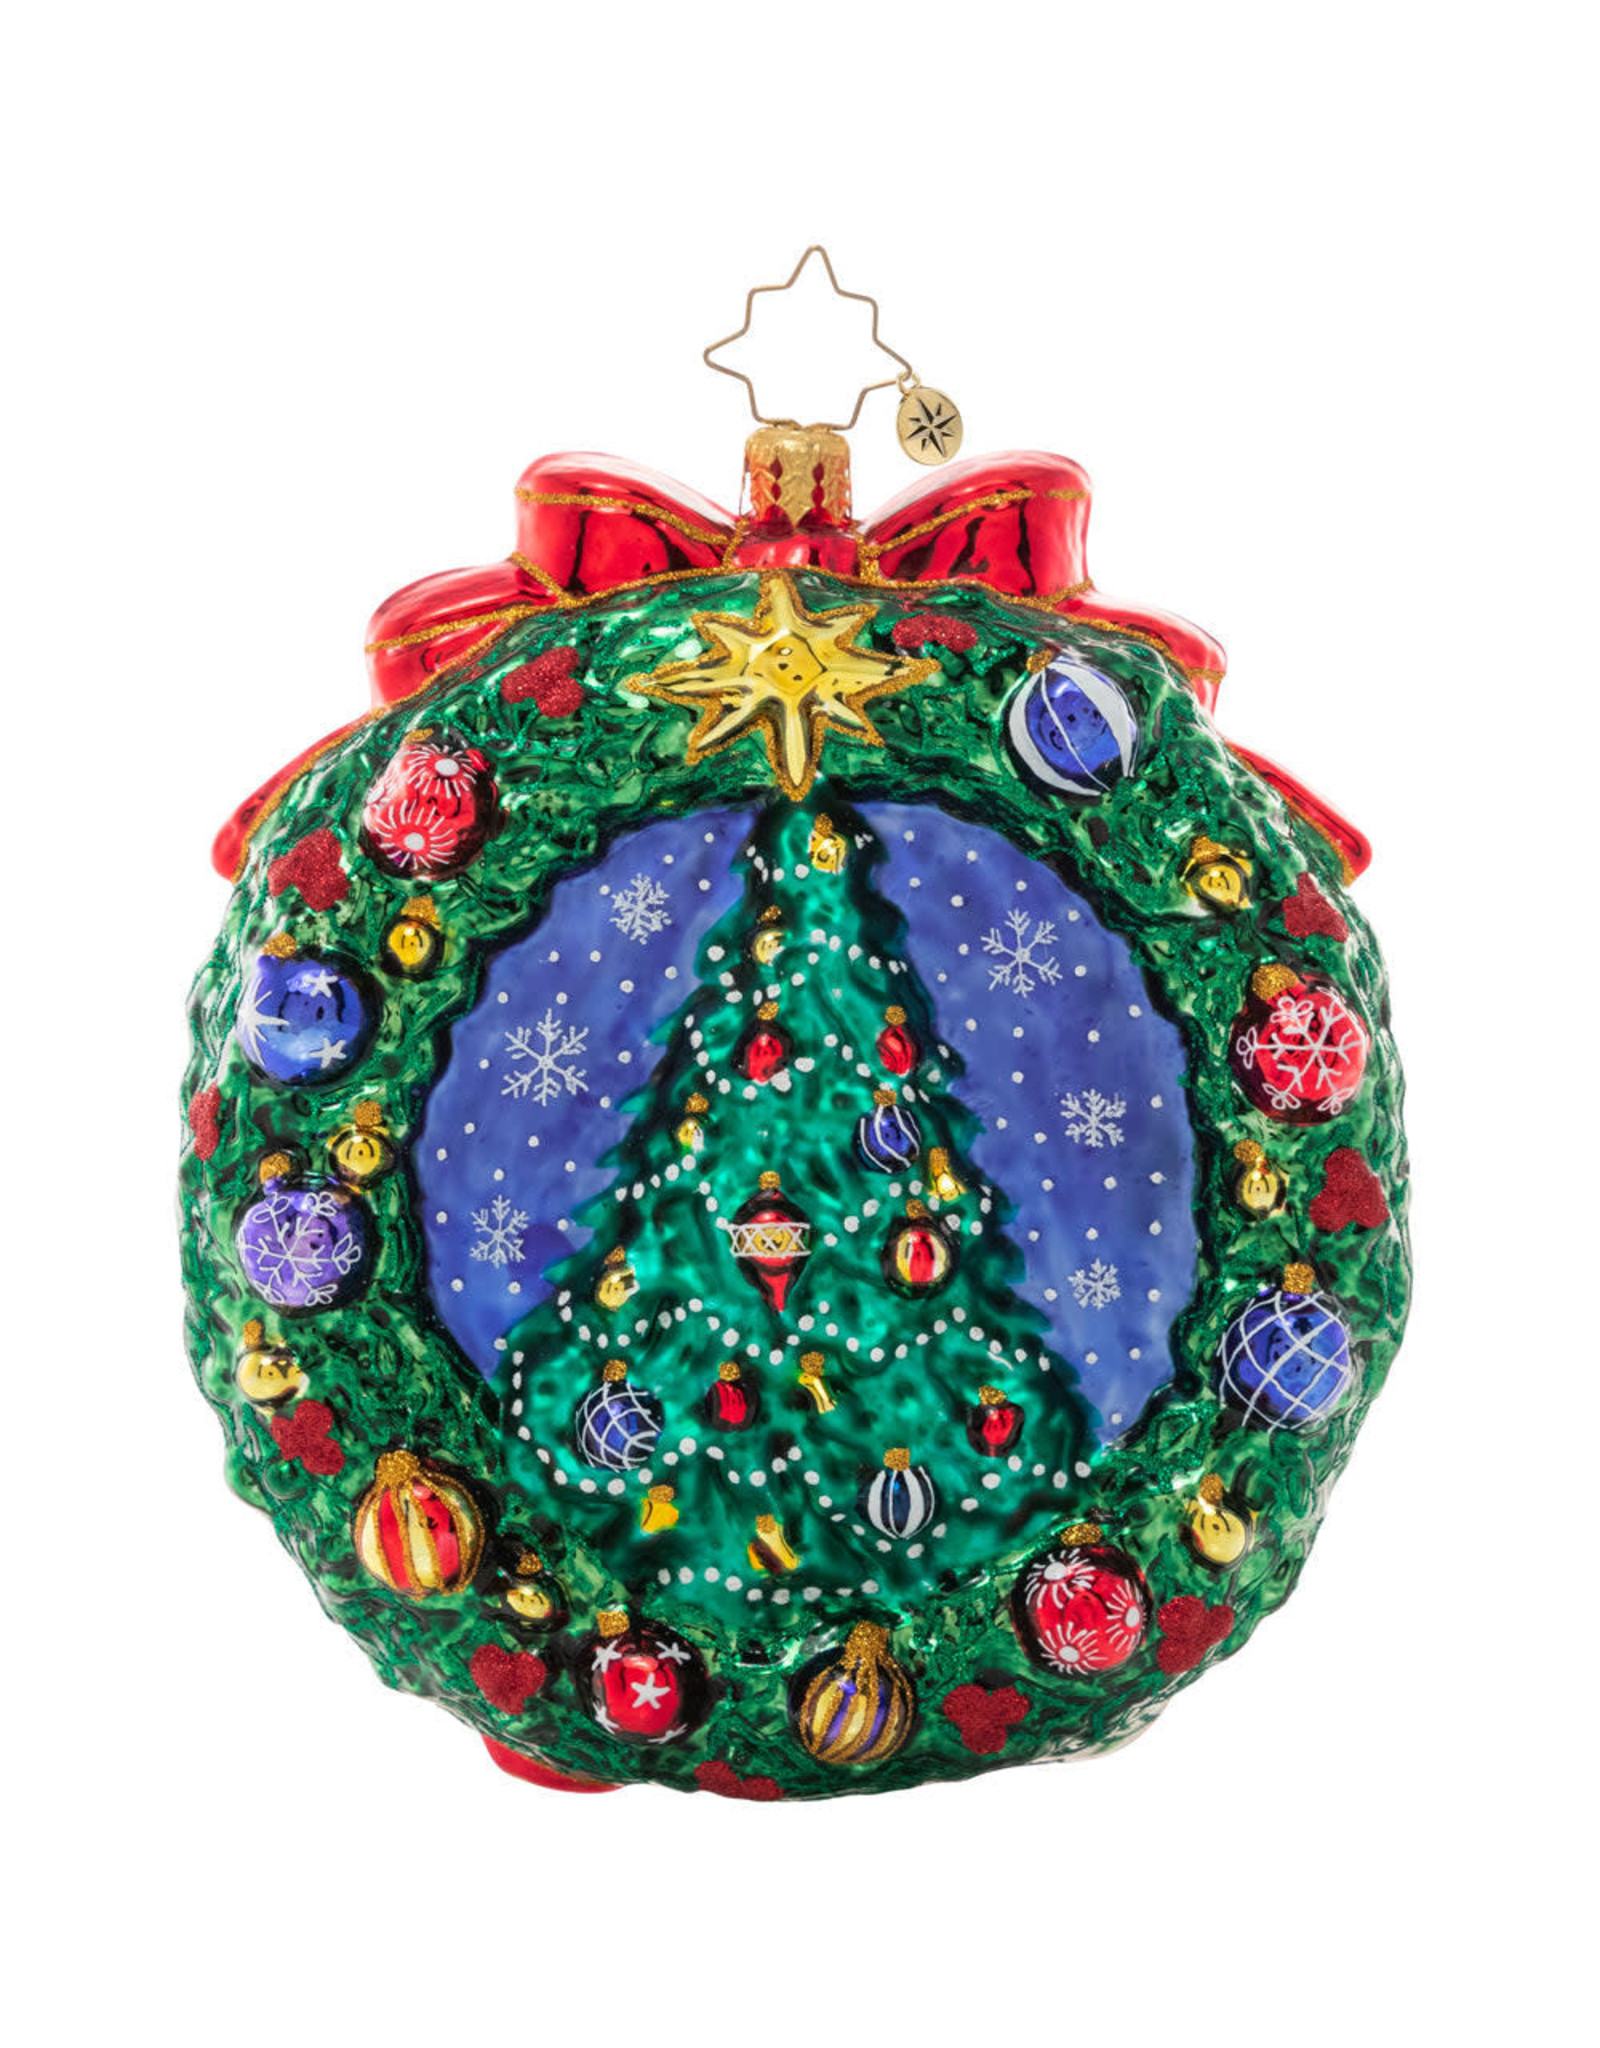 Christopher Radko Santas Story Time Christmas Ornament